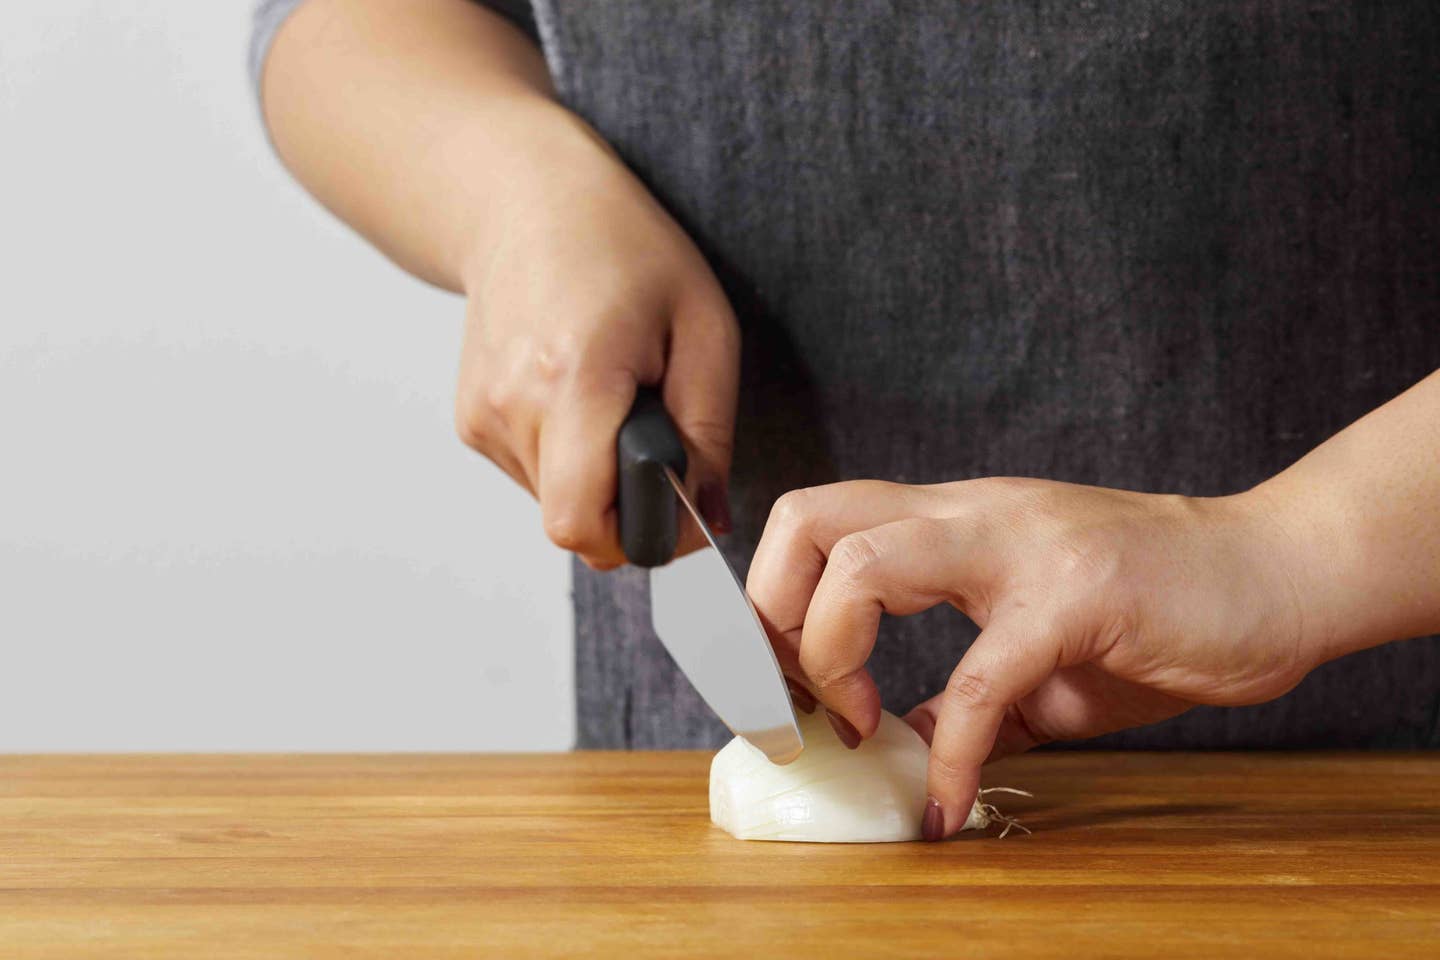 Knife Cutting Basics